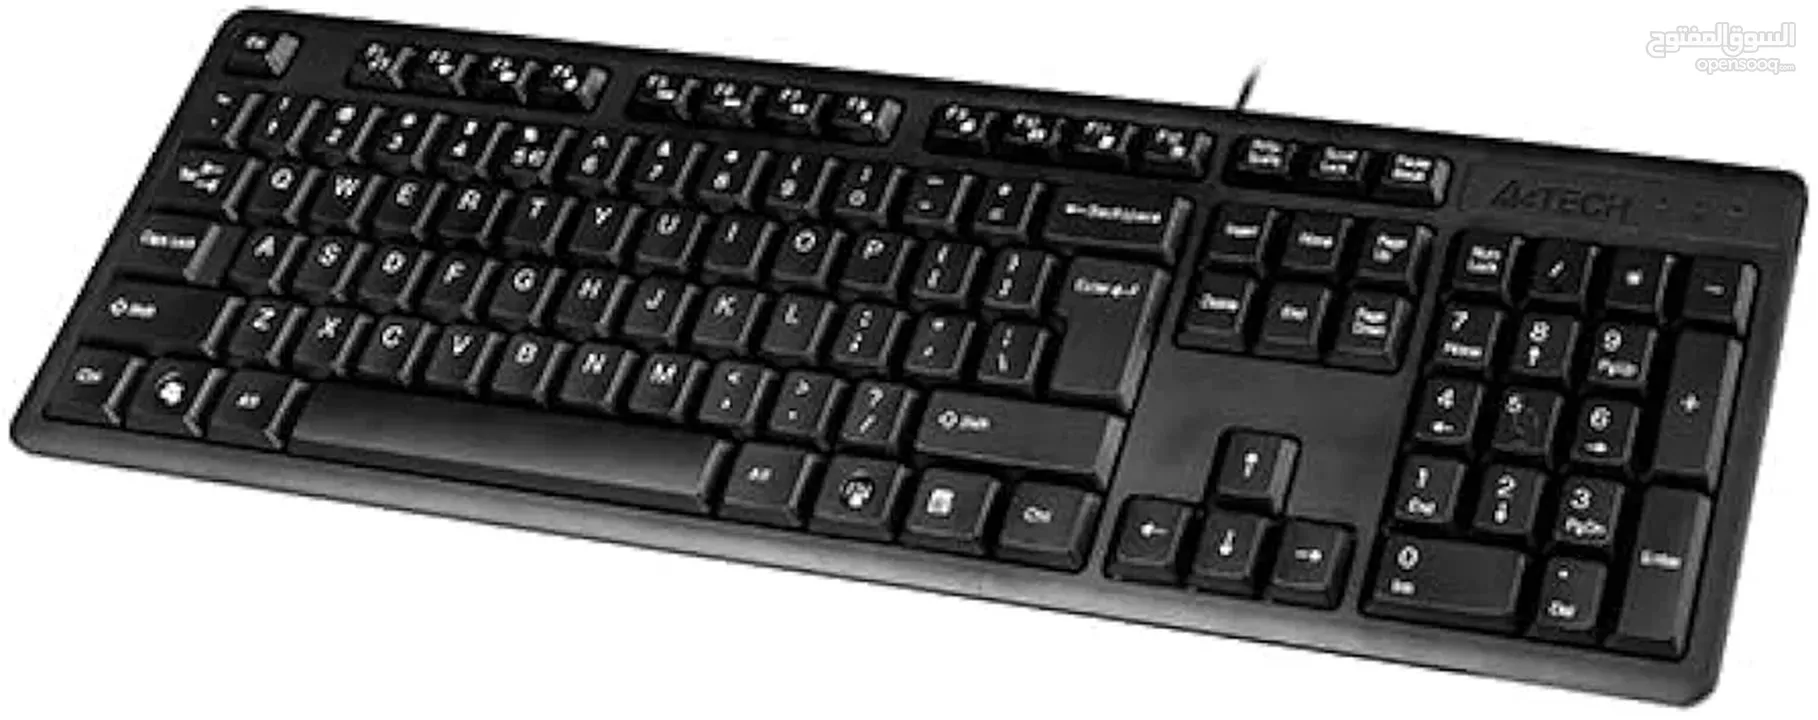 keyboard a4tech kk3